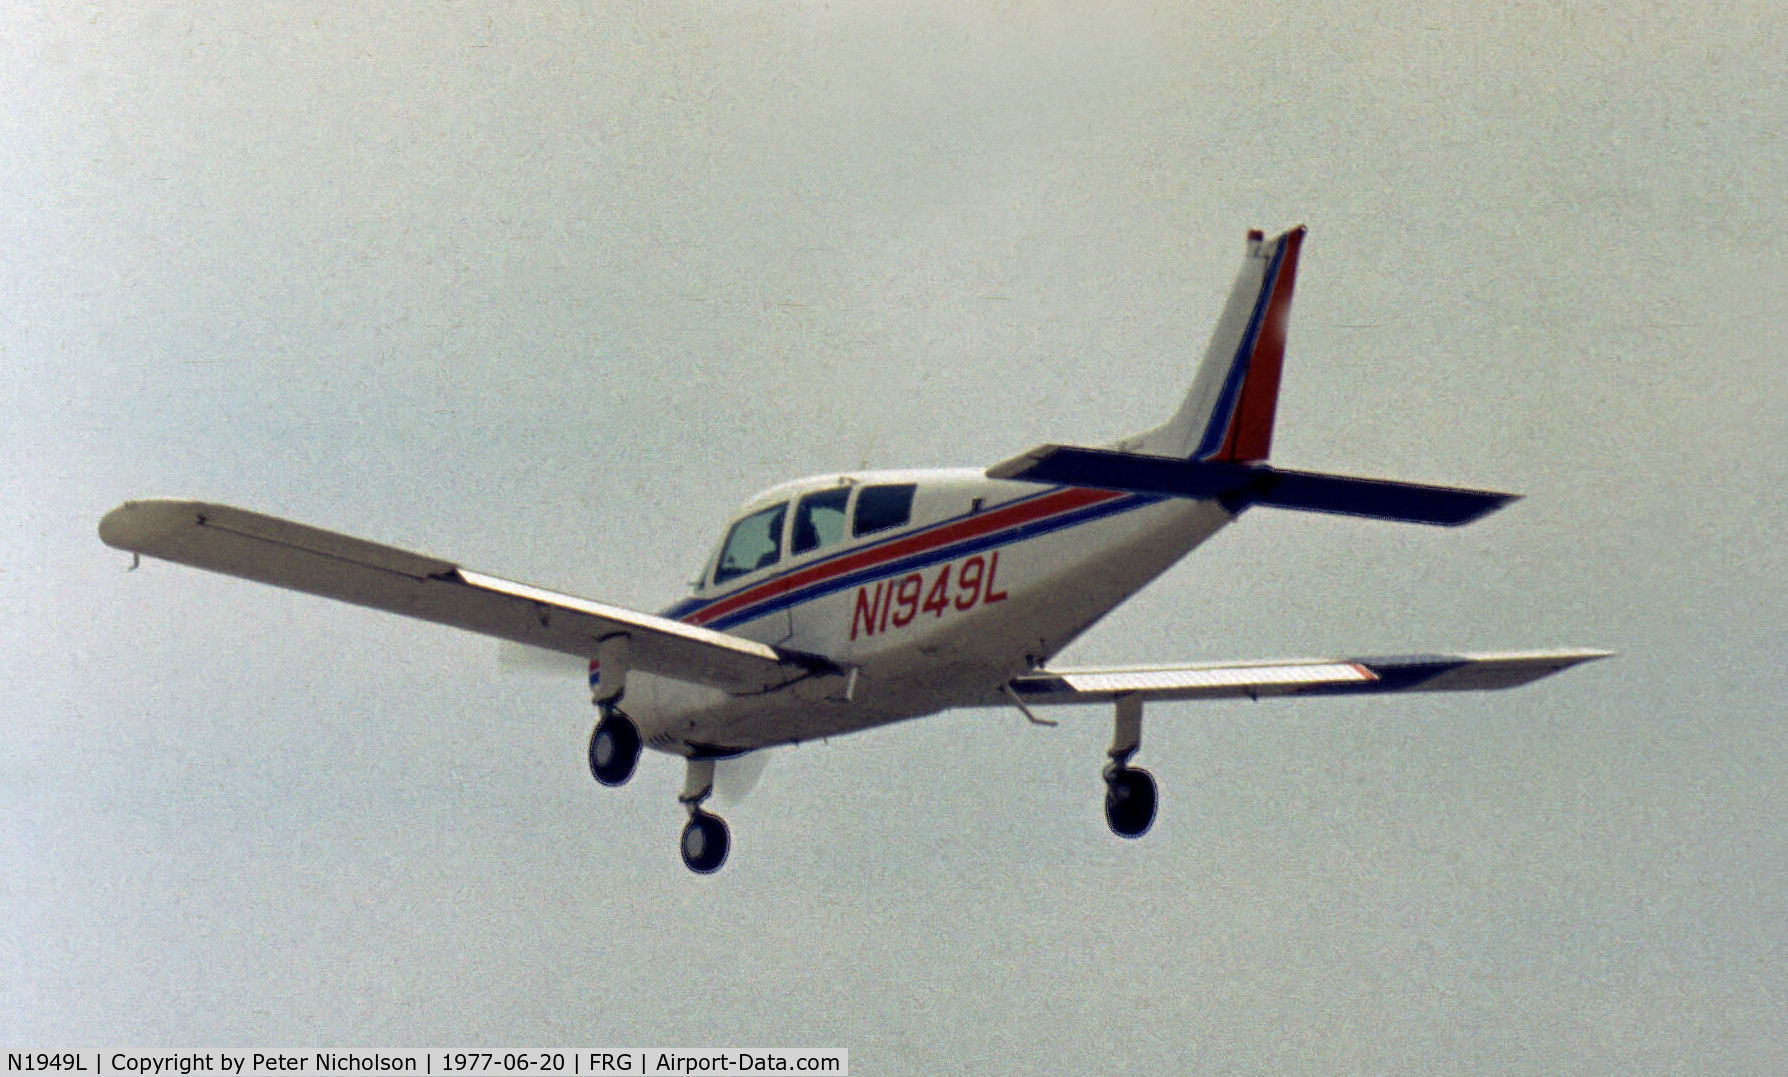 N1949L, 1976 Beech C23 Sundowner 180 C/N M-1825, Beech Sundowner on approach to Republic Airfield at Farmingdale, Long Island in the Summer of 1977.